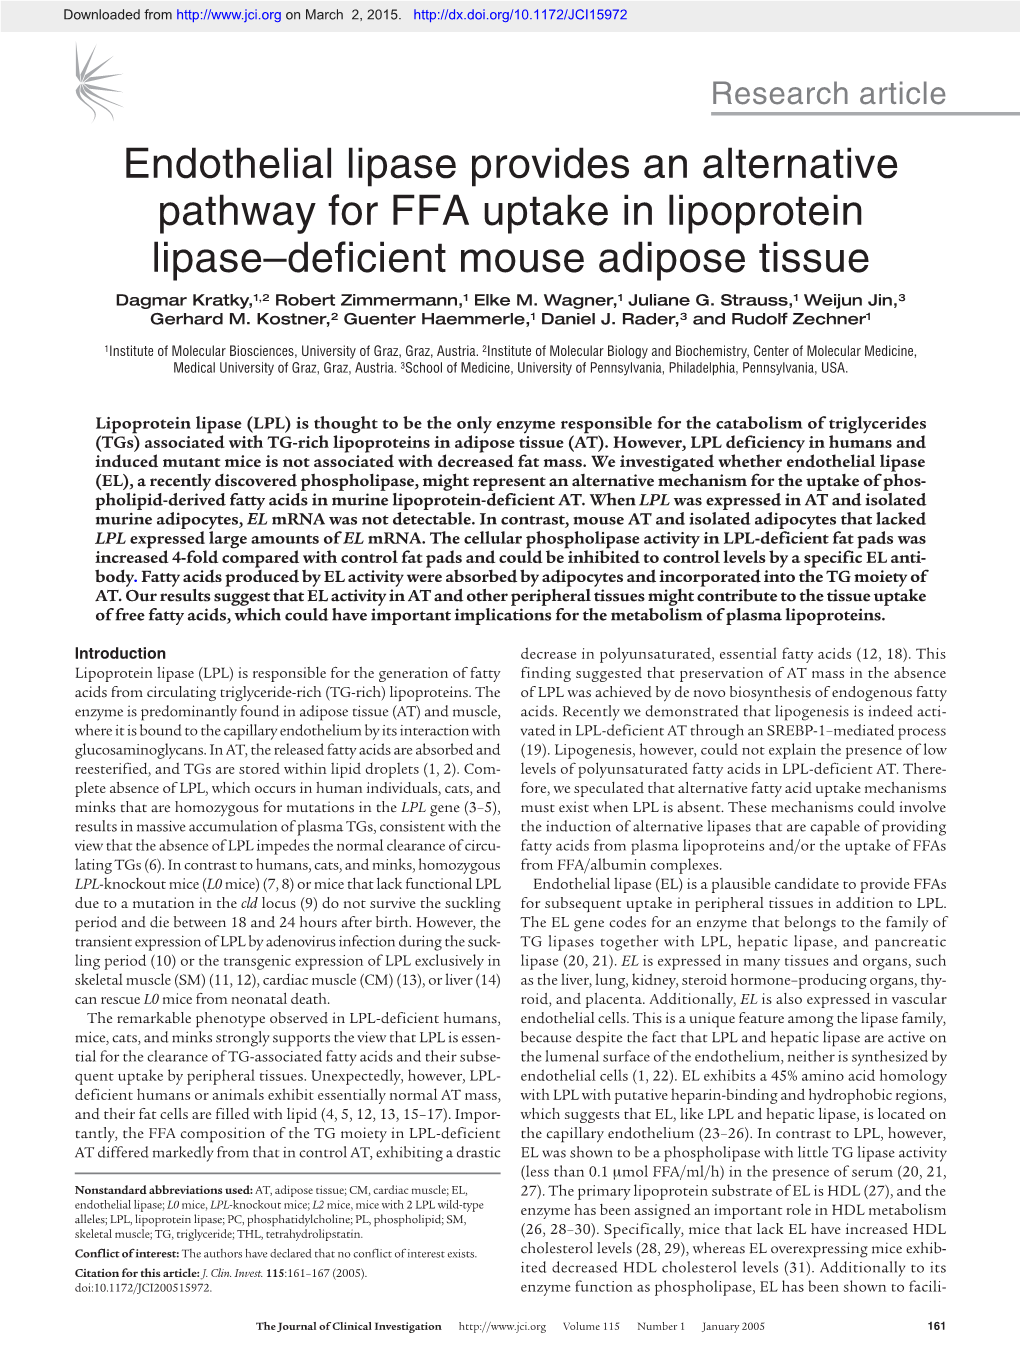 Endothelial Lipase Provides an Alternative Pathway for FFA Uptake in Lipoprotein Lipase–Deficient Mouse Adipose Tissue Dagmar Kratky,1,2 Robert Zimmermann,1 Elke M